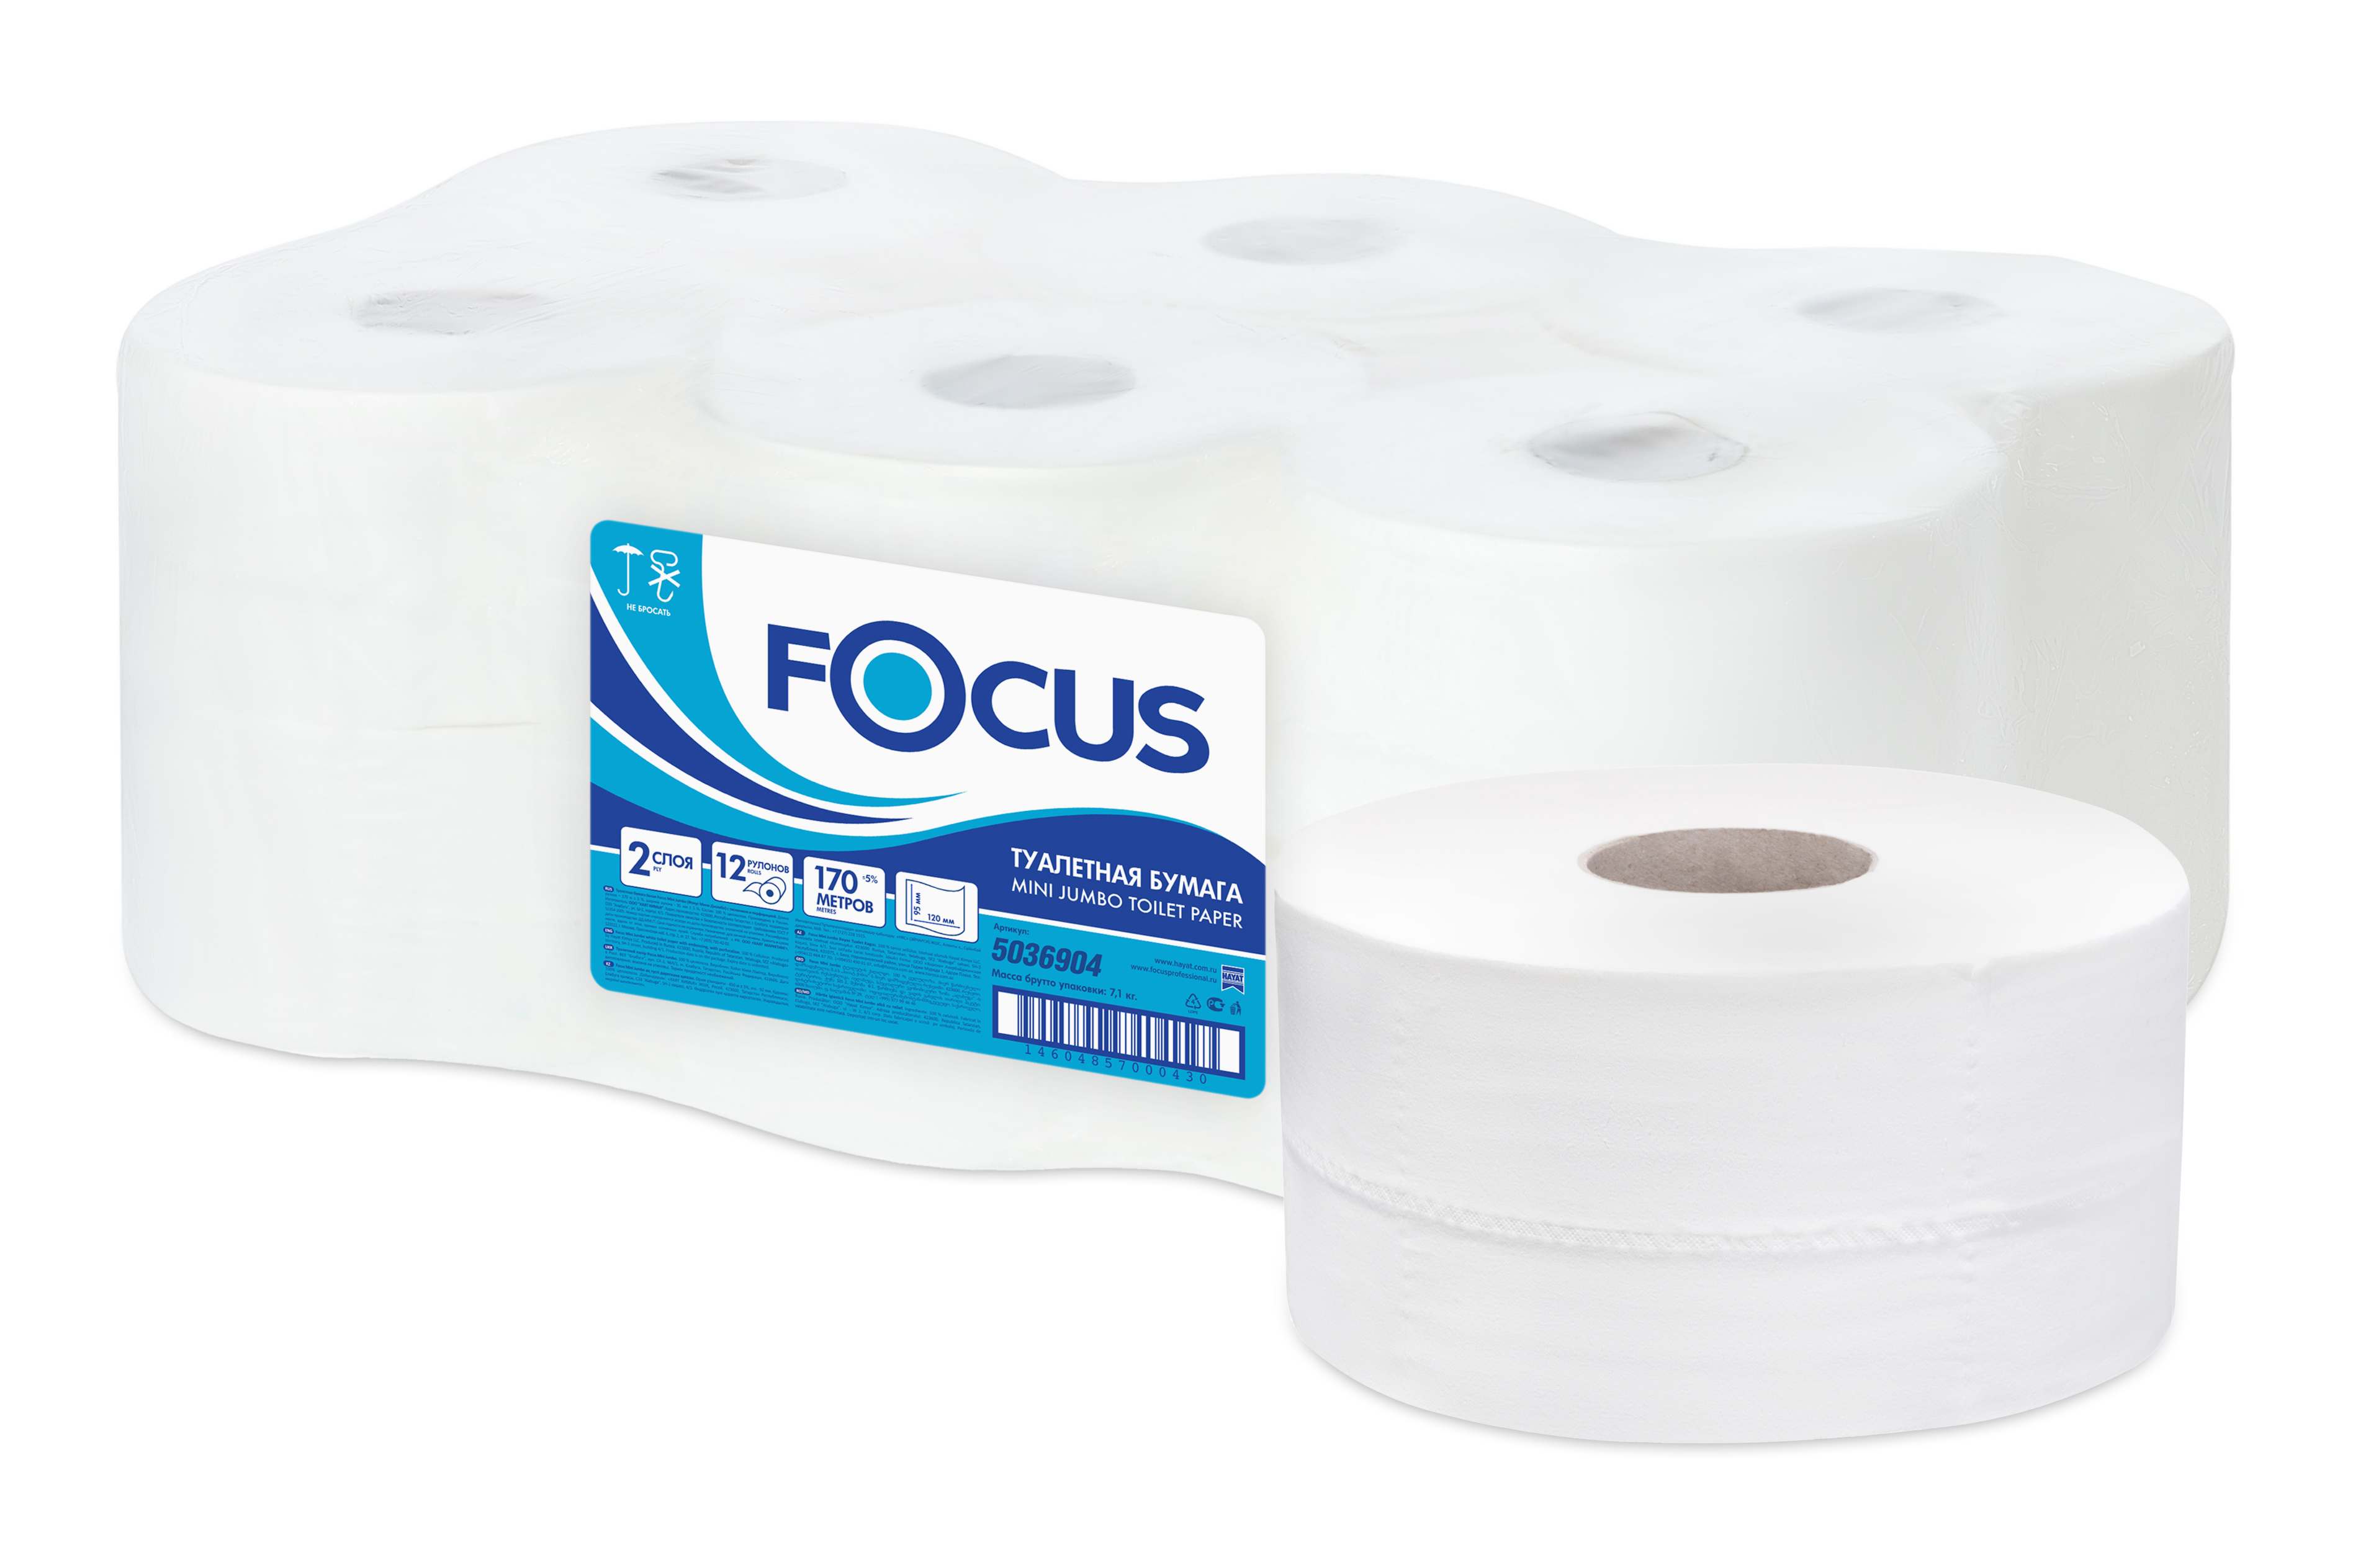 Бумага туалетная Focus Jumbo Mini T2, слоев: 2, листов 1416шт., длина 170м, белый, 12шт. (5036904)